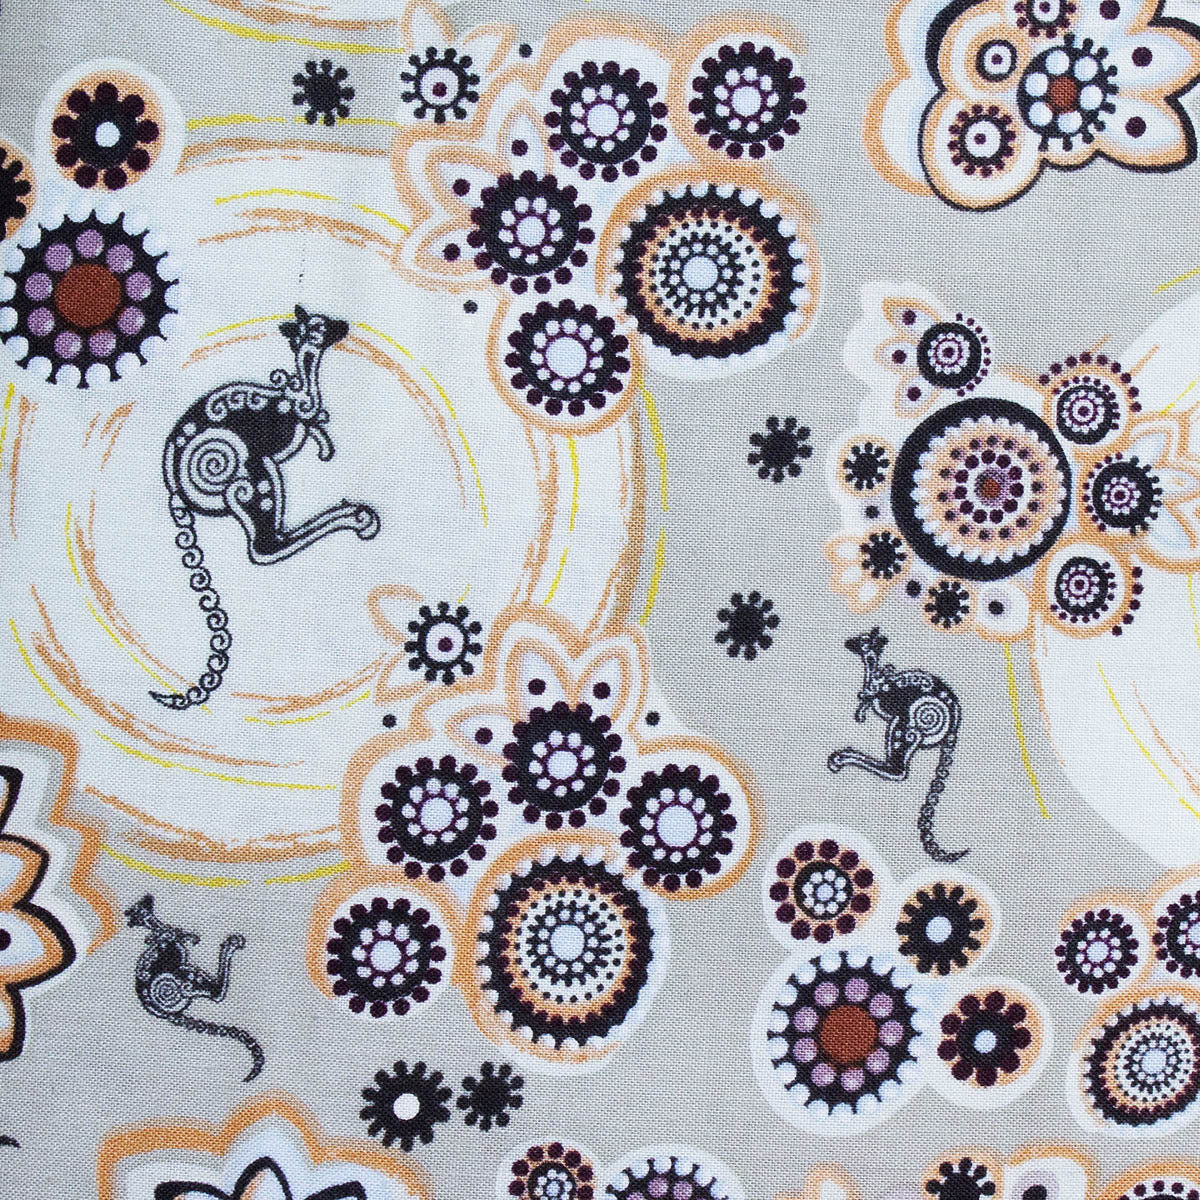 KANGAROO 2 NEUTRAL by Aboriginal Artist SAMANTHA JAMES